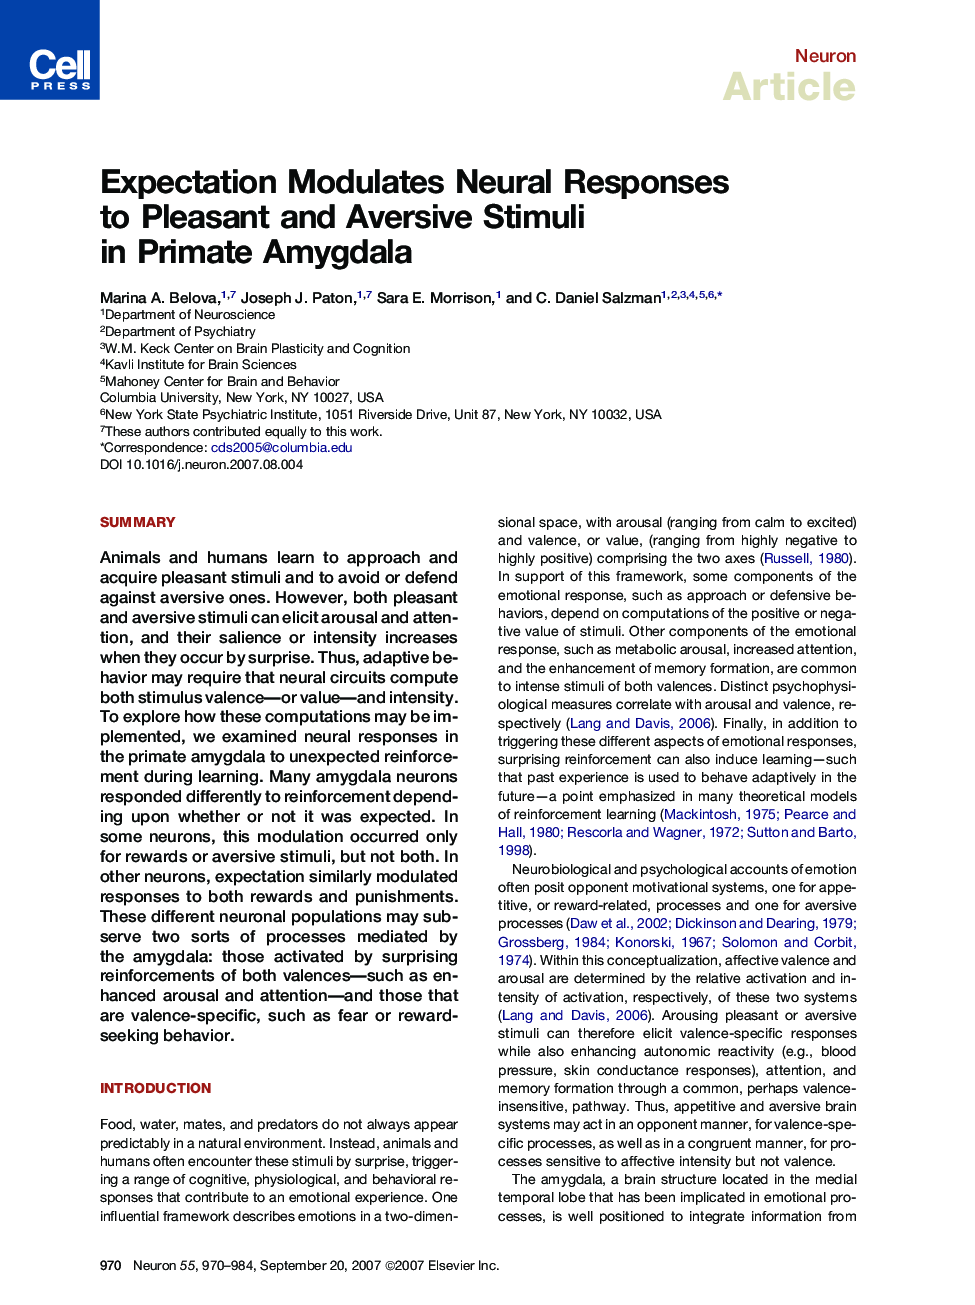 Expectation Modulates Neural Responses to Pleasant and Aversive Stimuli in Primate Amygdala